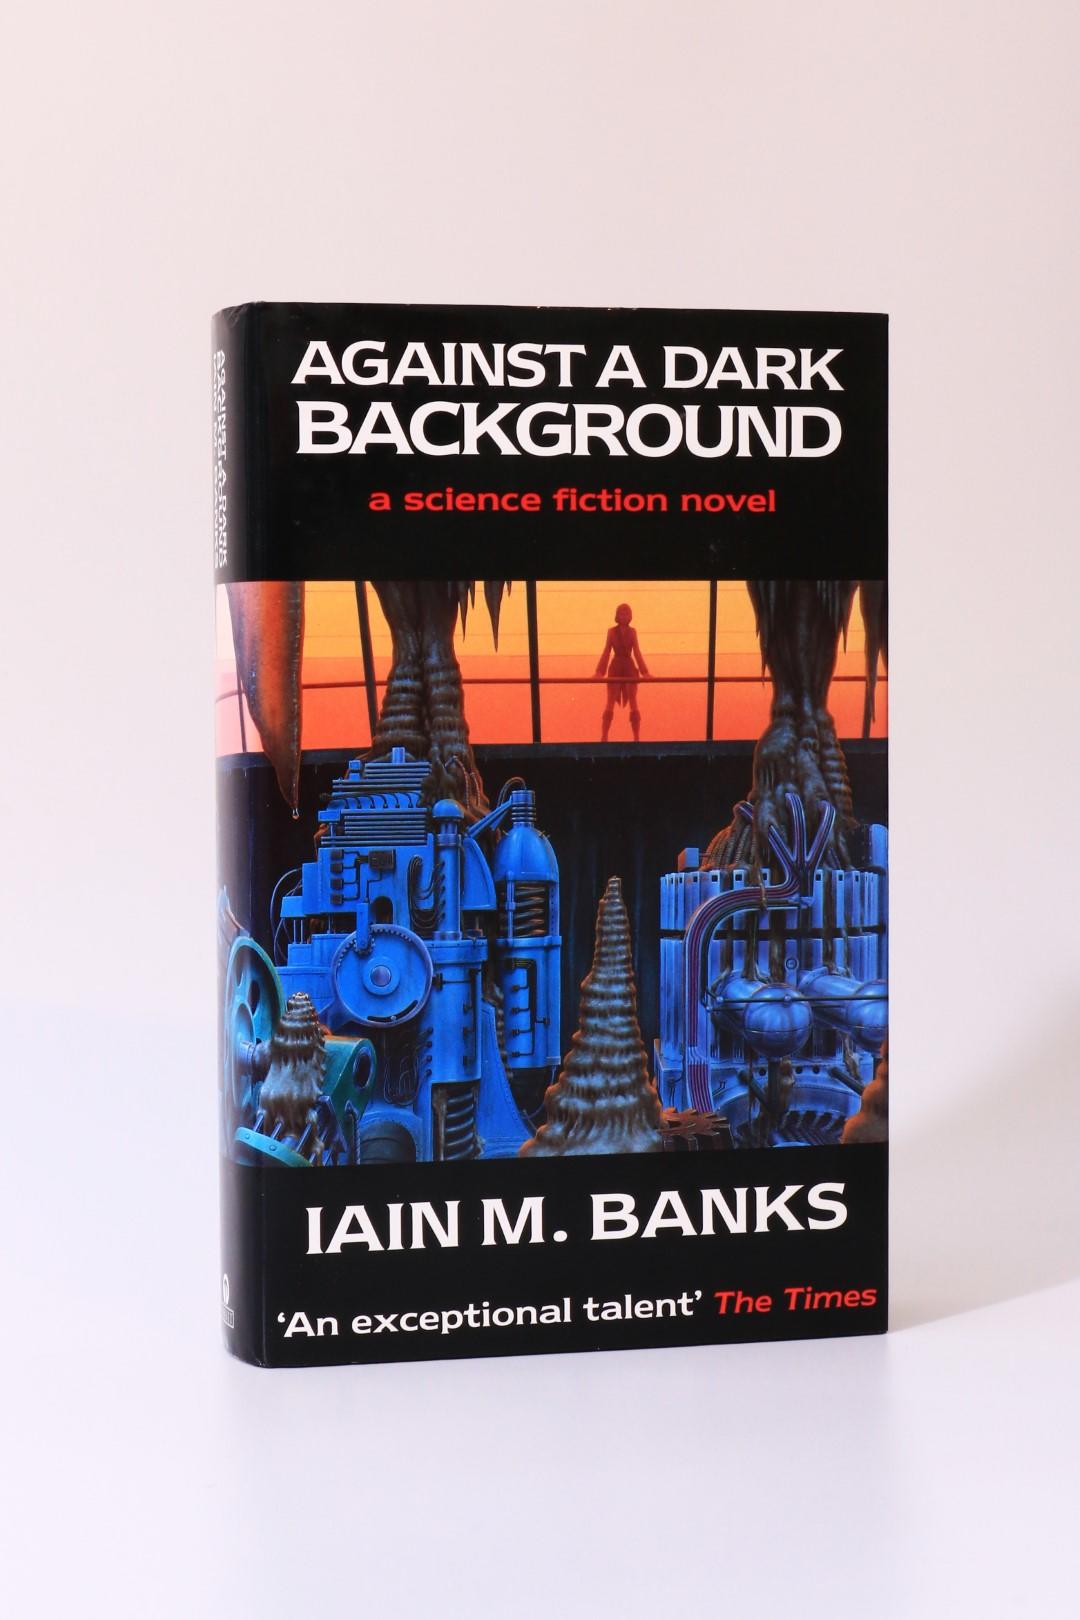 Iain M. Banks - Against A Dark Background - Orbit, 1993, First Edition.